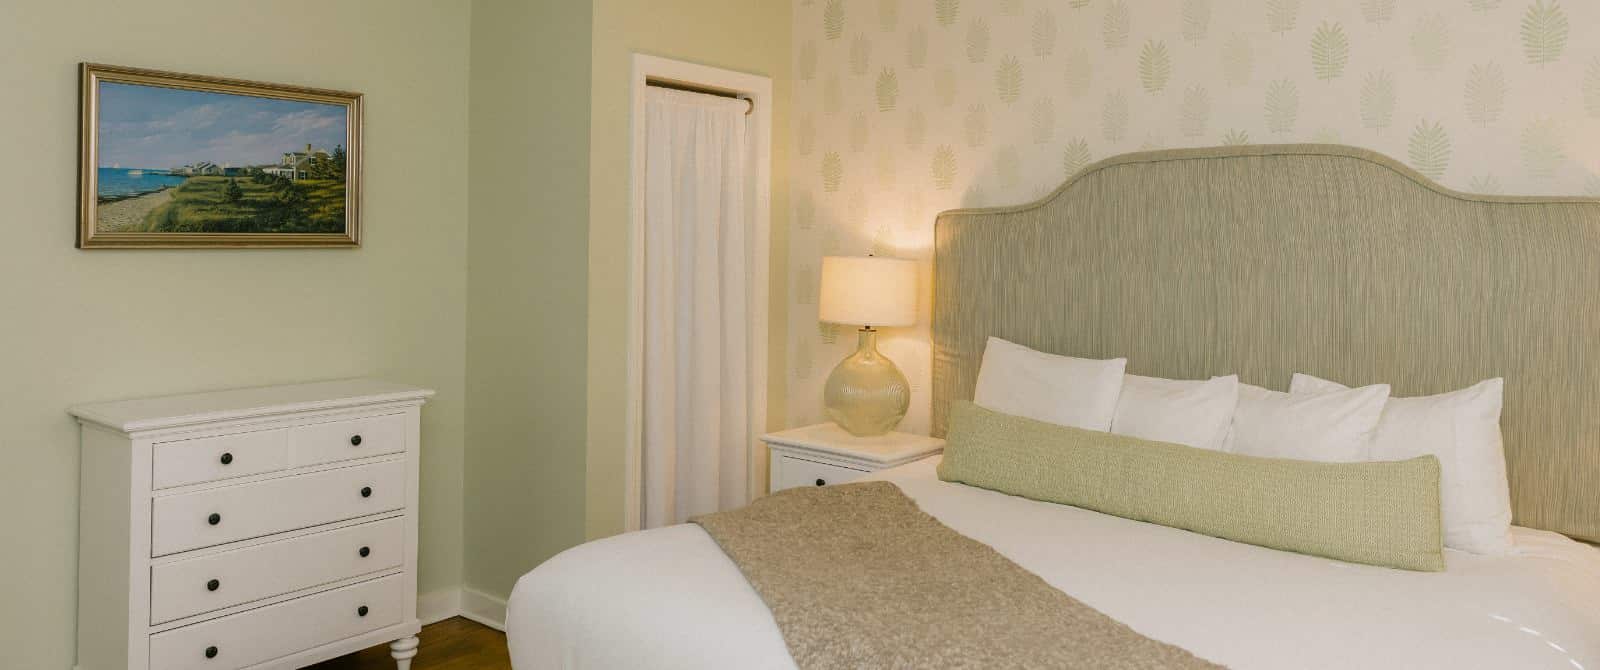 Bedroom with wooden flooring, light green walls, multicolored frawns wallpaper, light green upholstered headboard, white bedding, and white dresser